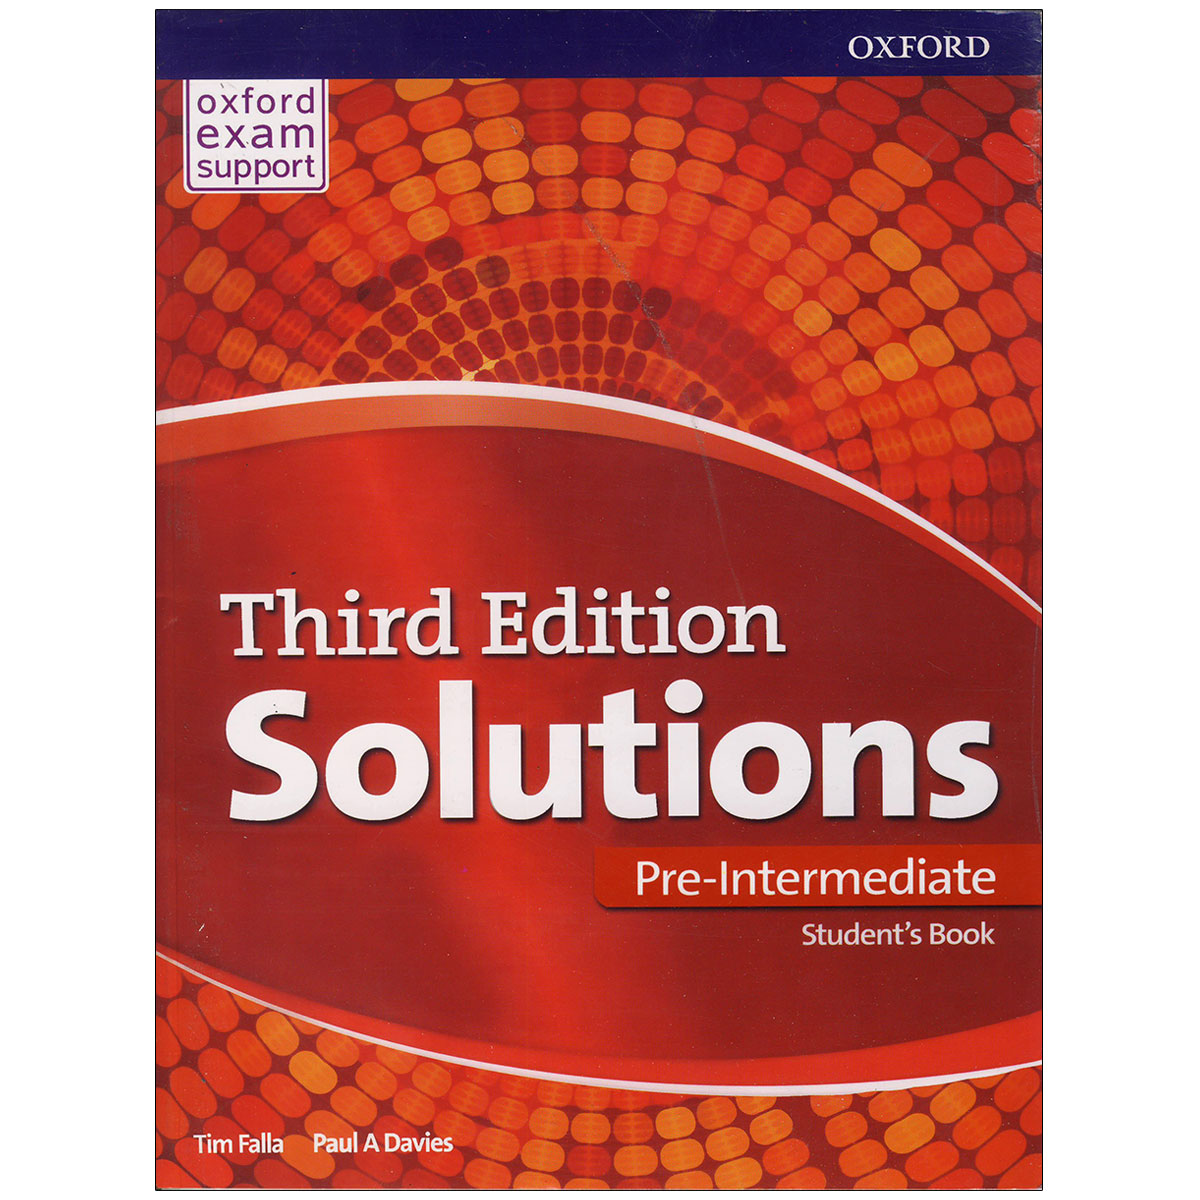 Int solution. Solutions pre-Intermediate 3rd. Third Edition solutions Workbook Oxford. Солюшенс пре интермедиат 3 издание. Pre-Intermediate Intermediate b1.